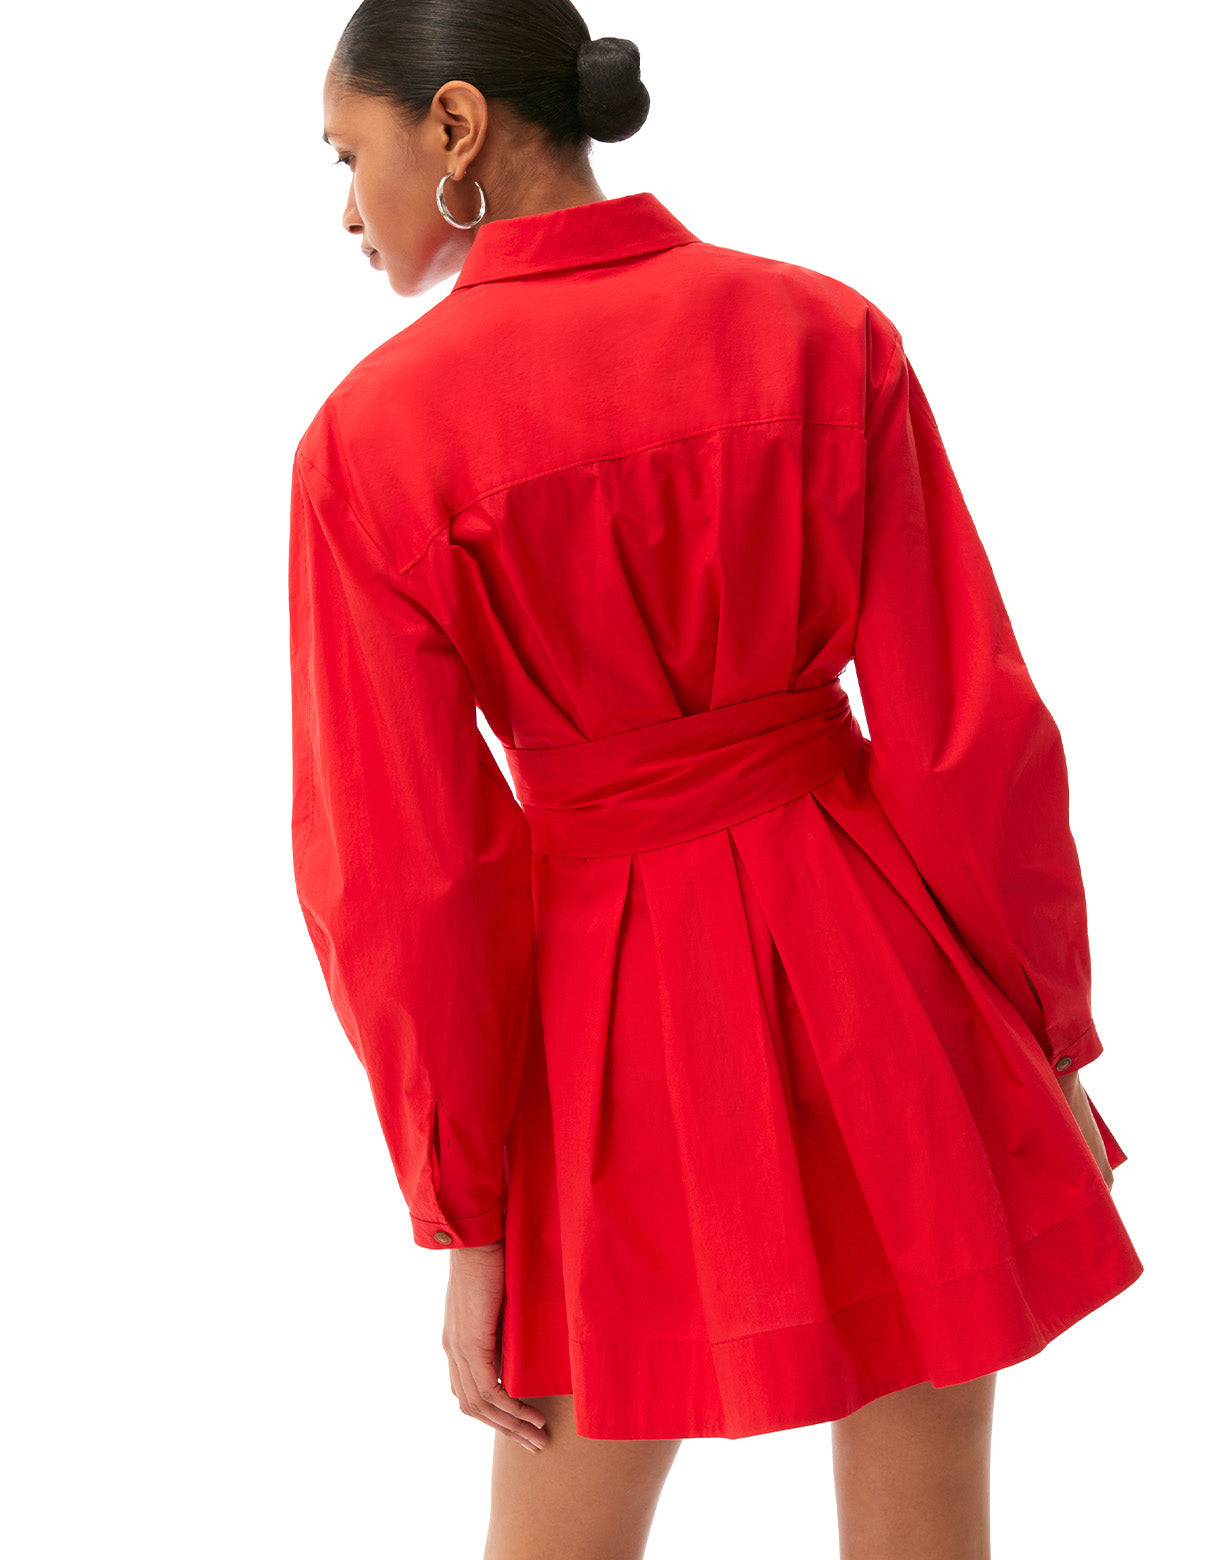 Austyn Long Sleeve mini shirt dress cherry red - flattering day to night dresses for women designer fashion by Toccin 